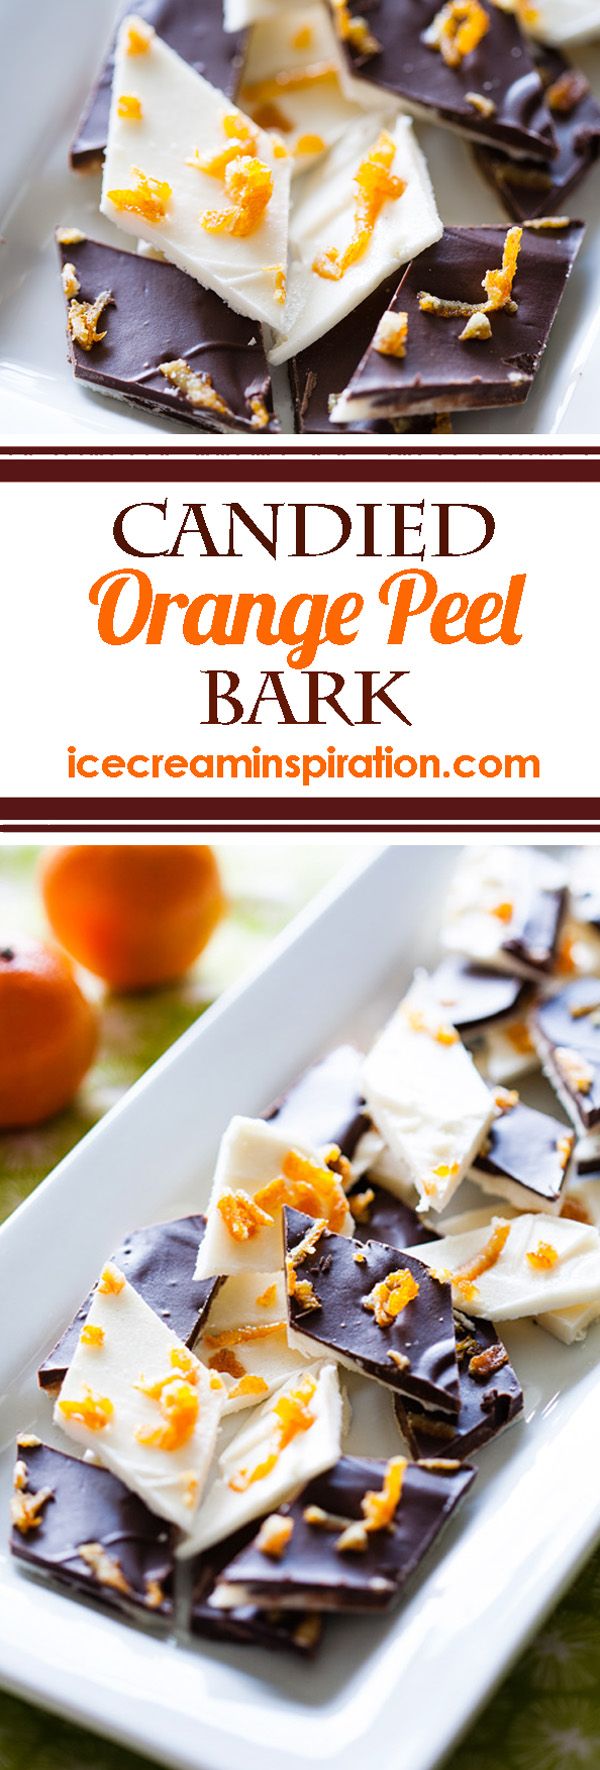 Candied Orange Peel Bark